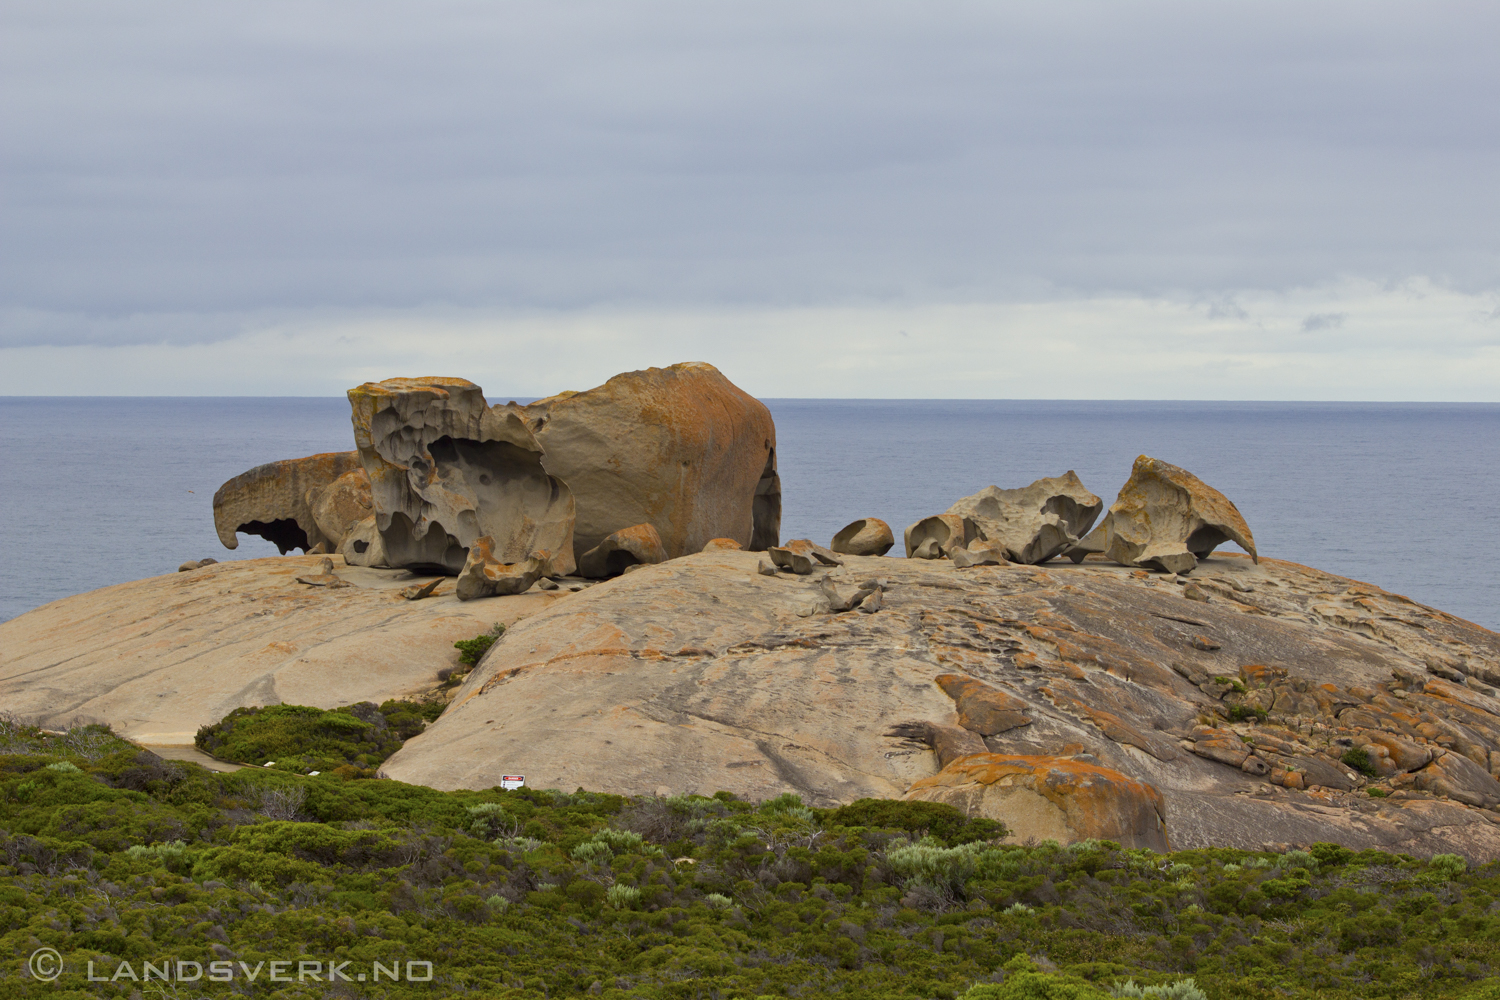 Remarkable Rocks, Kangaroo Island. 

(Canon EOS 550D / Sigma 70-200mm F2.8 OS)